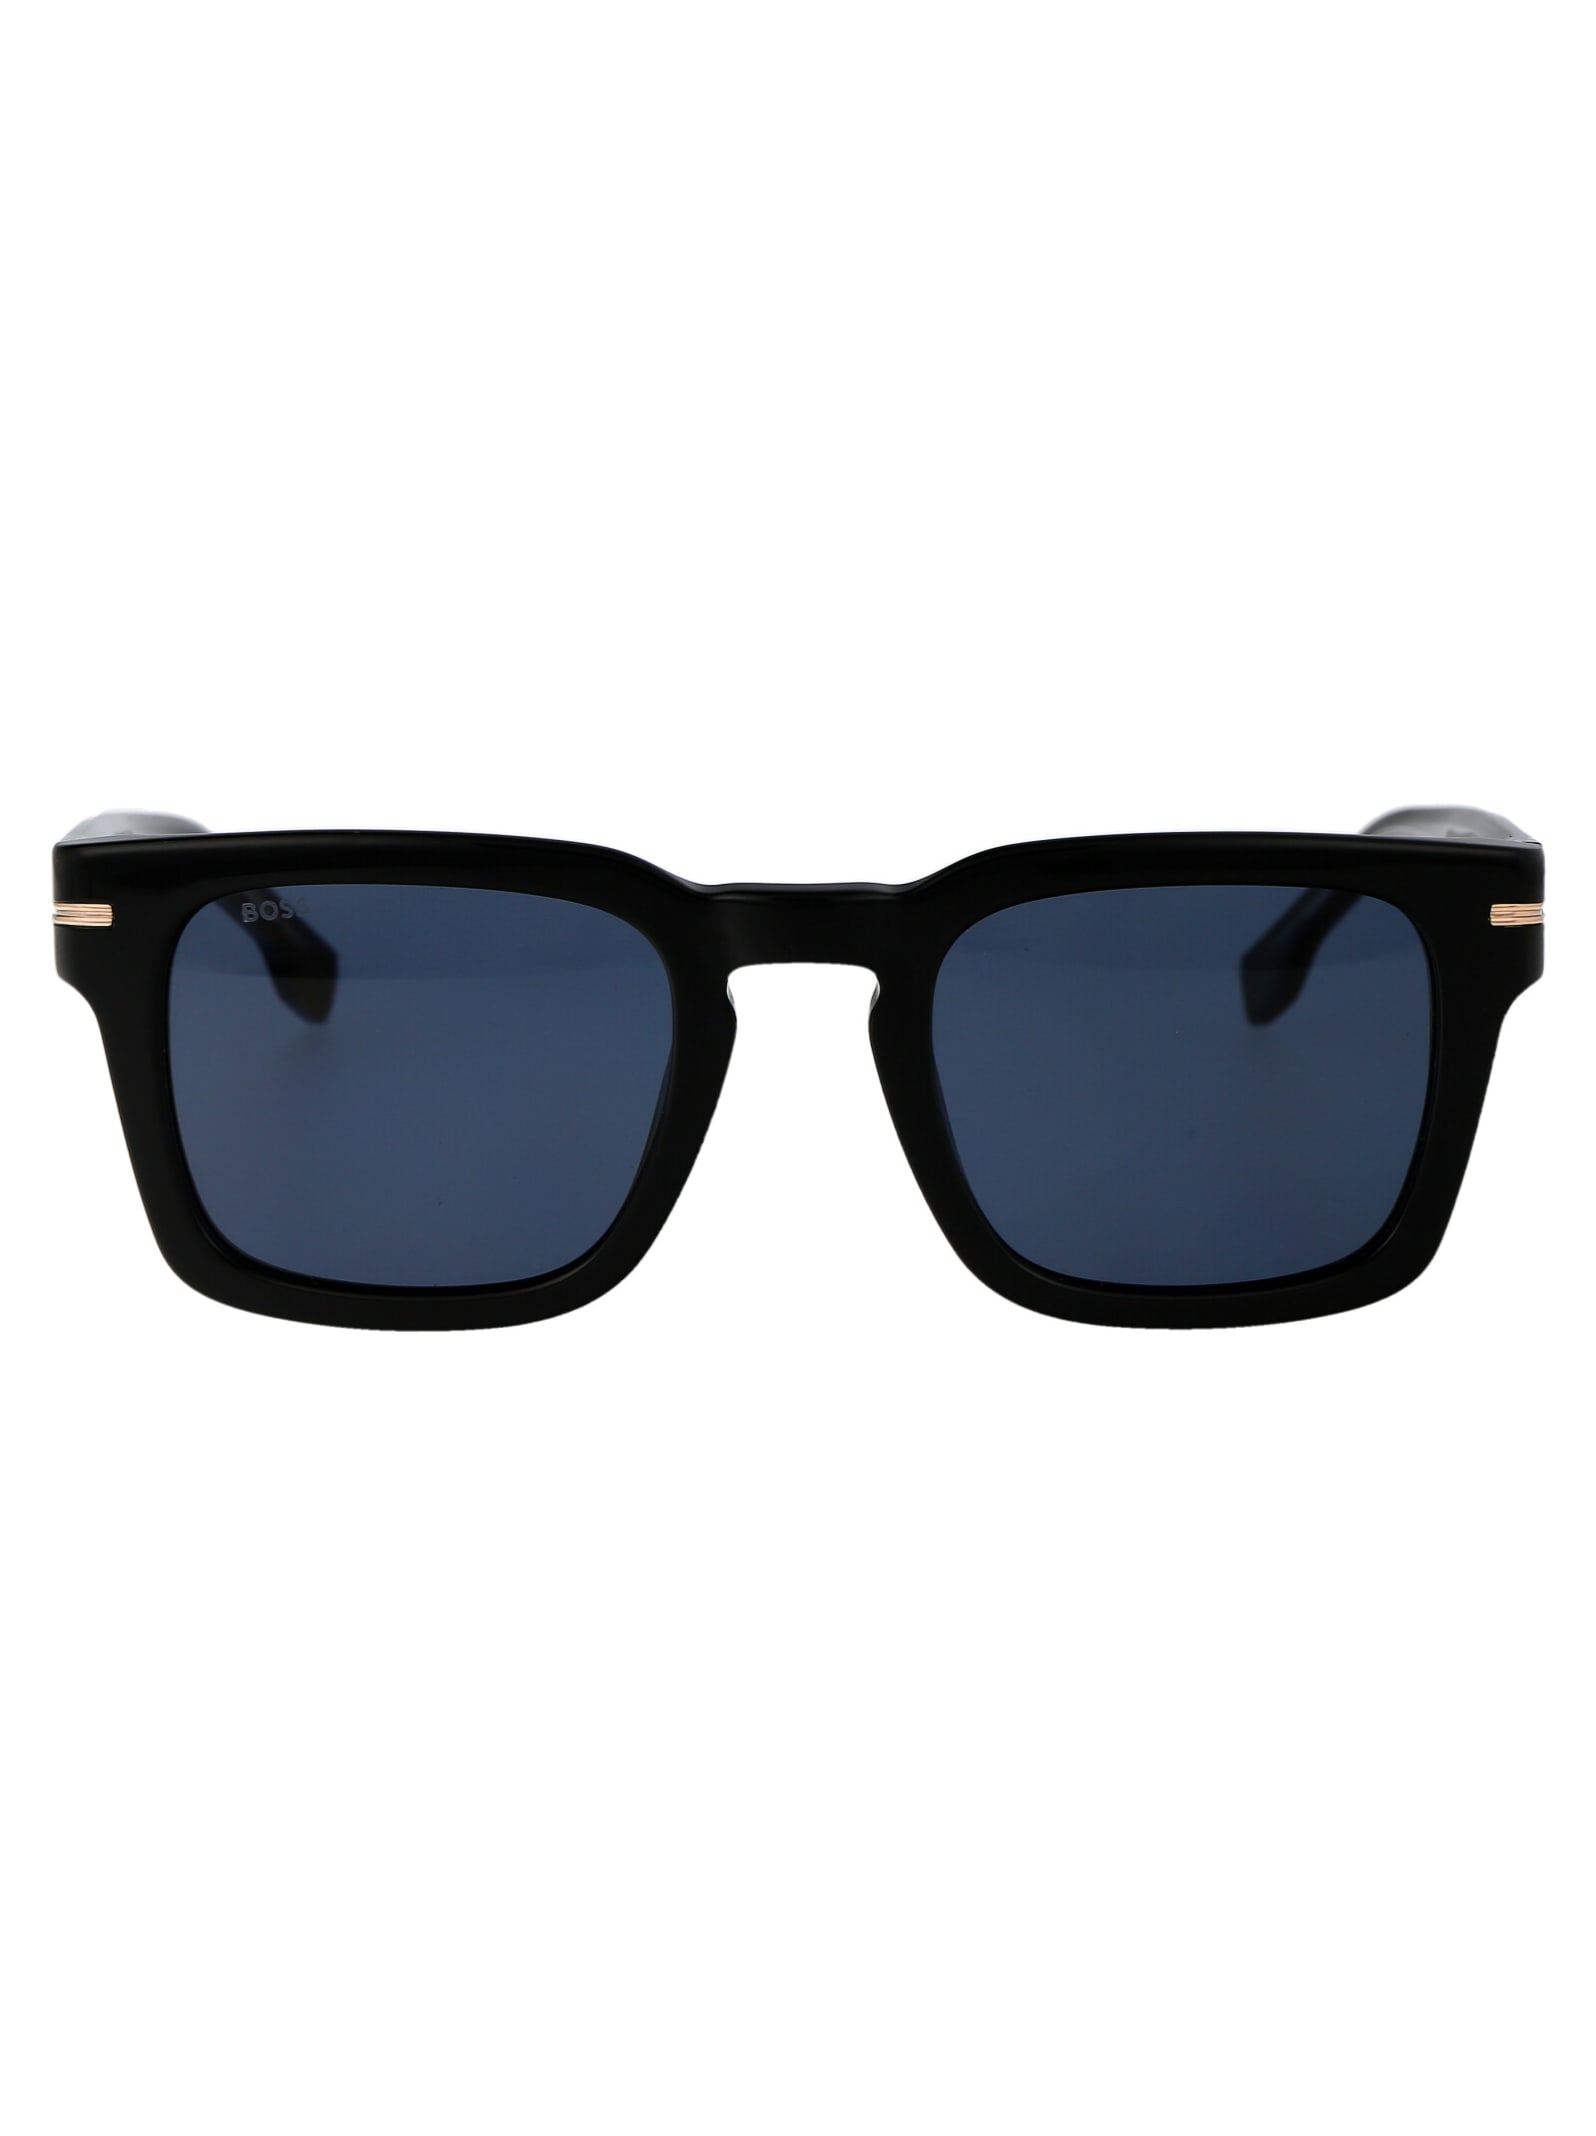 Boss 1625/s Sunglasses